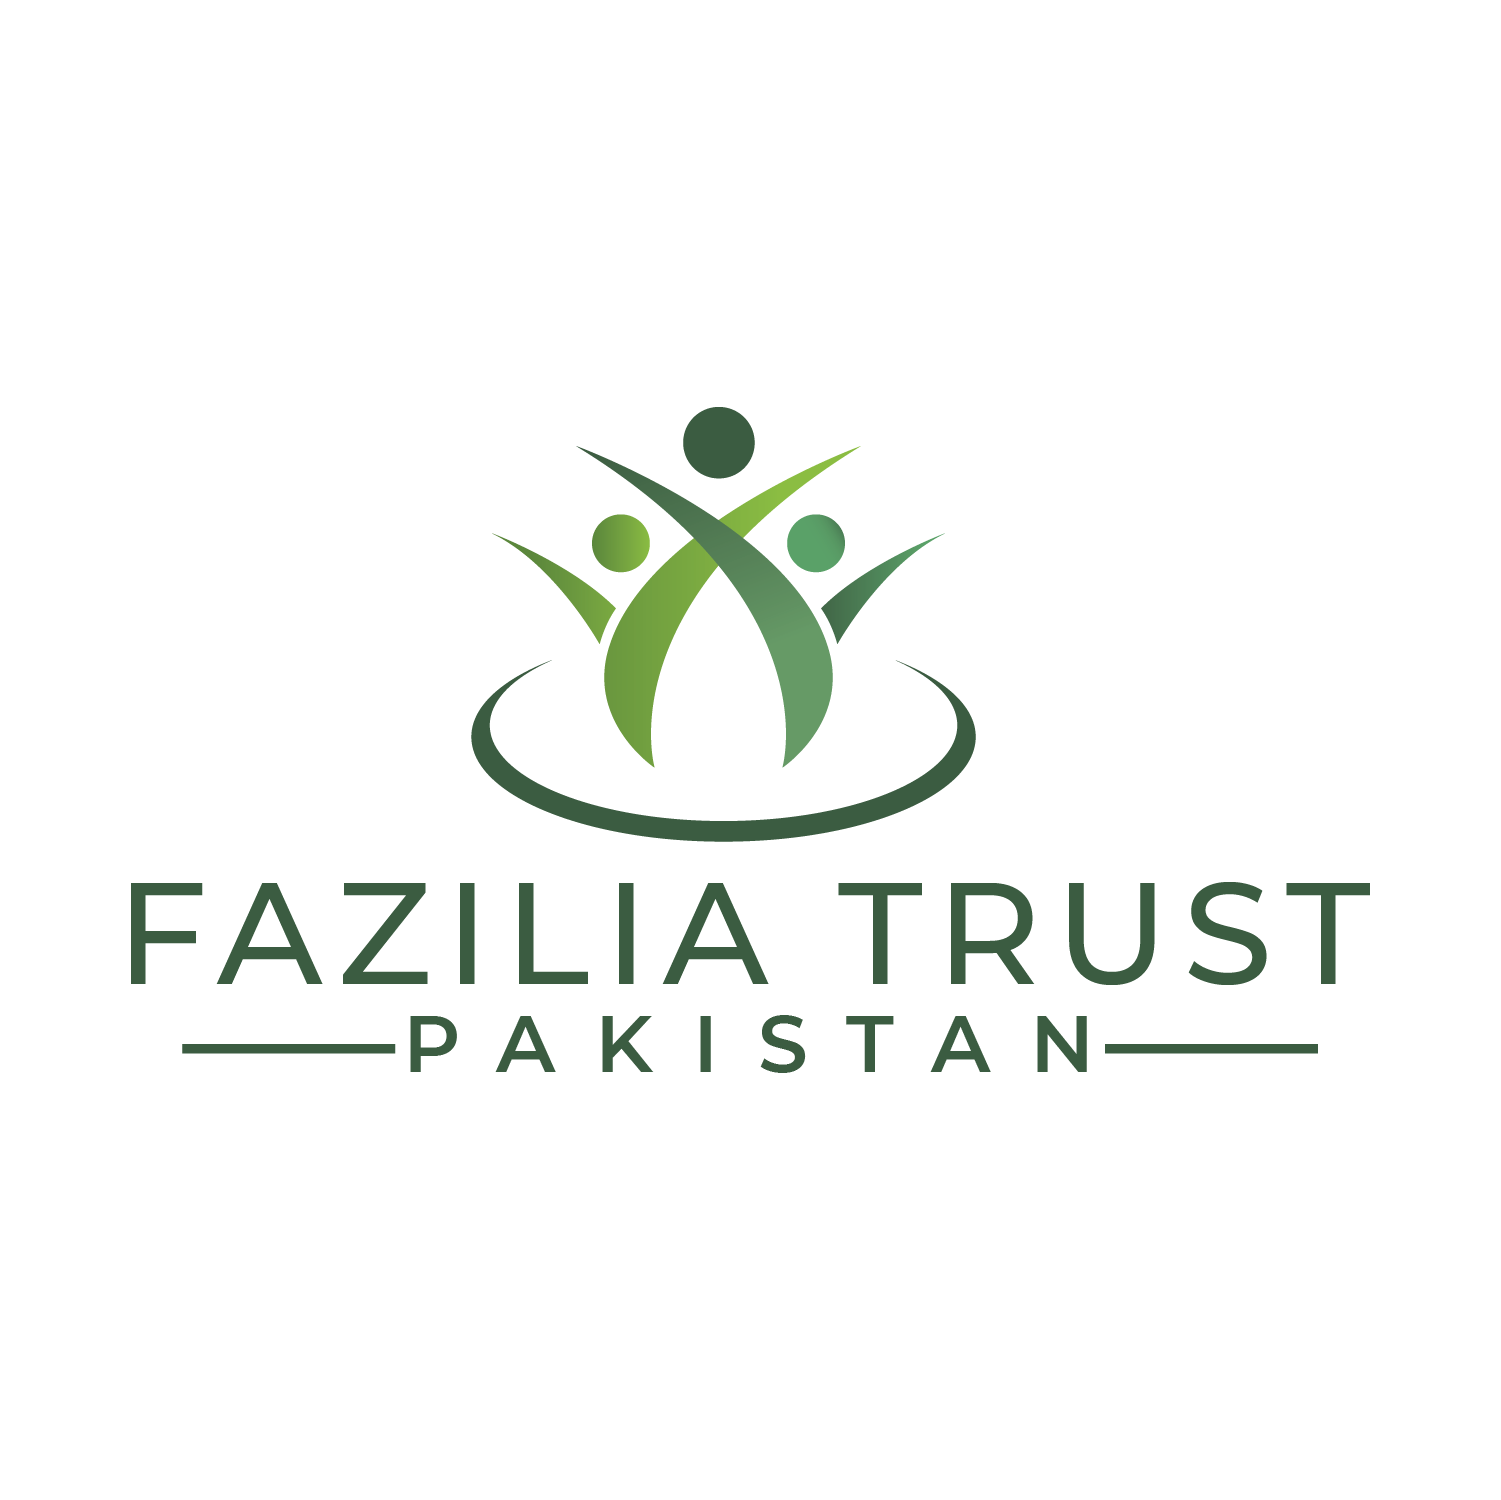 Fazilia Trust - Let's build a better world together